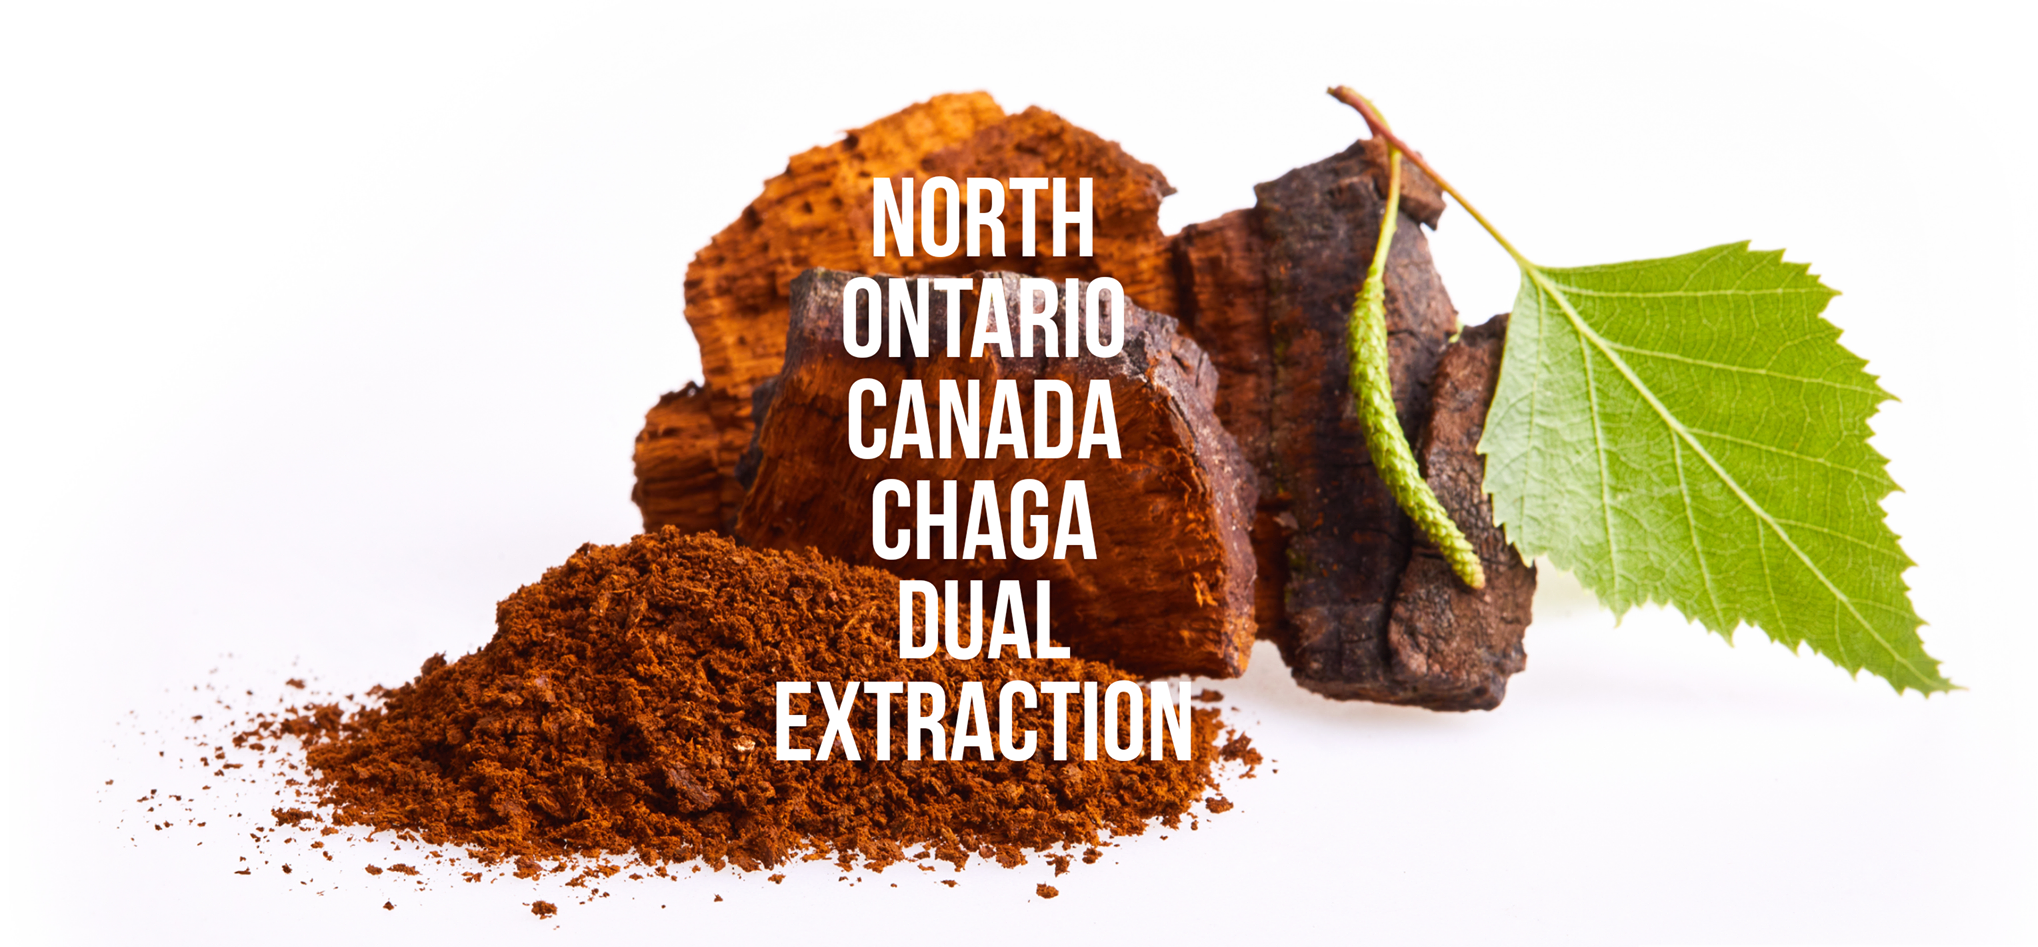 North Ontario Canada Chaga Dual Extraction